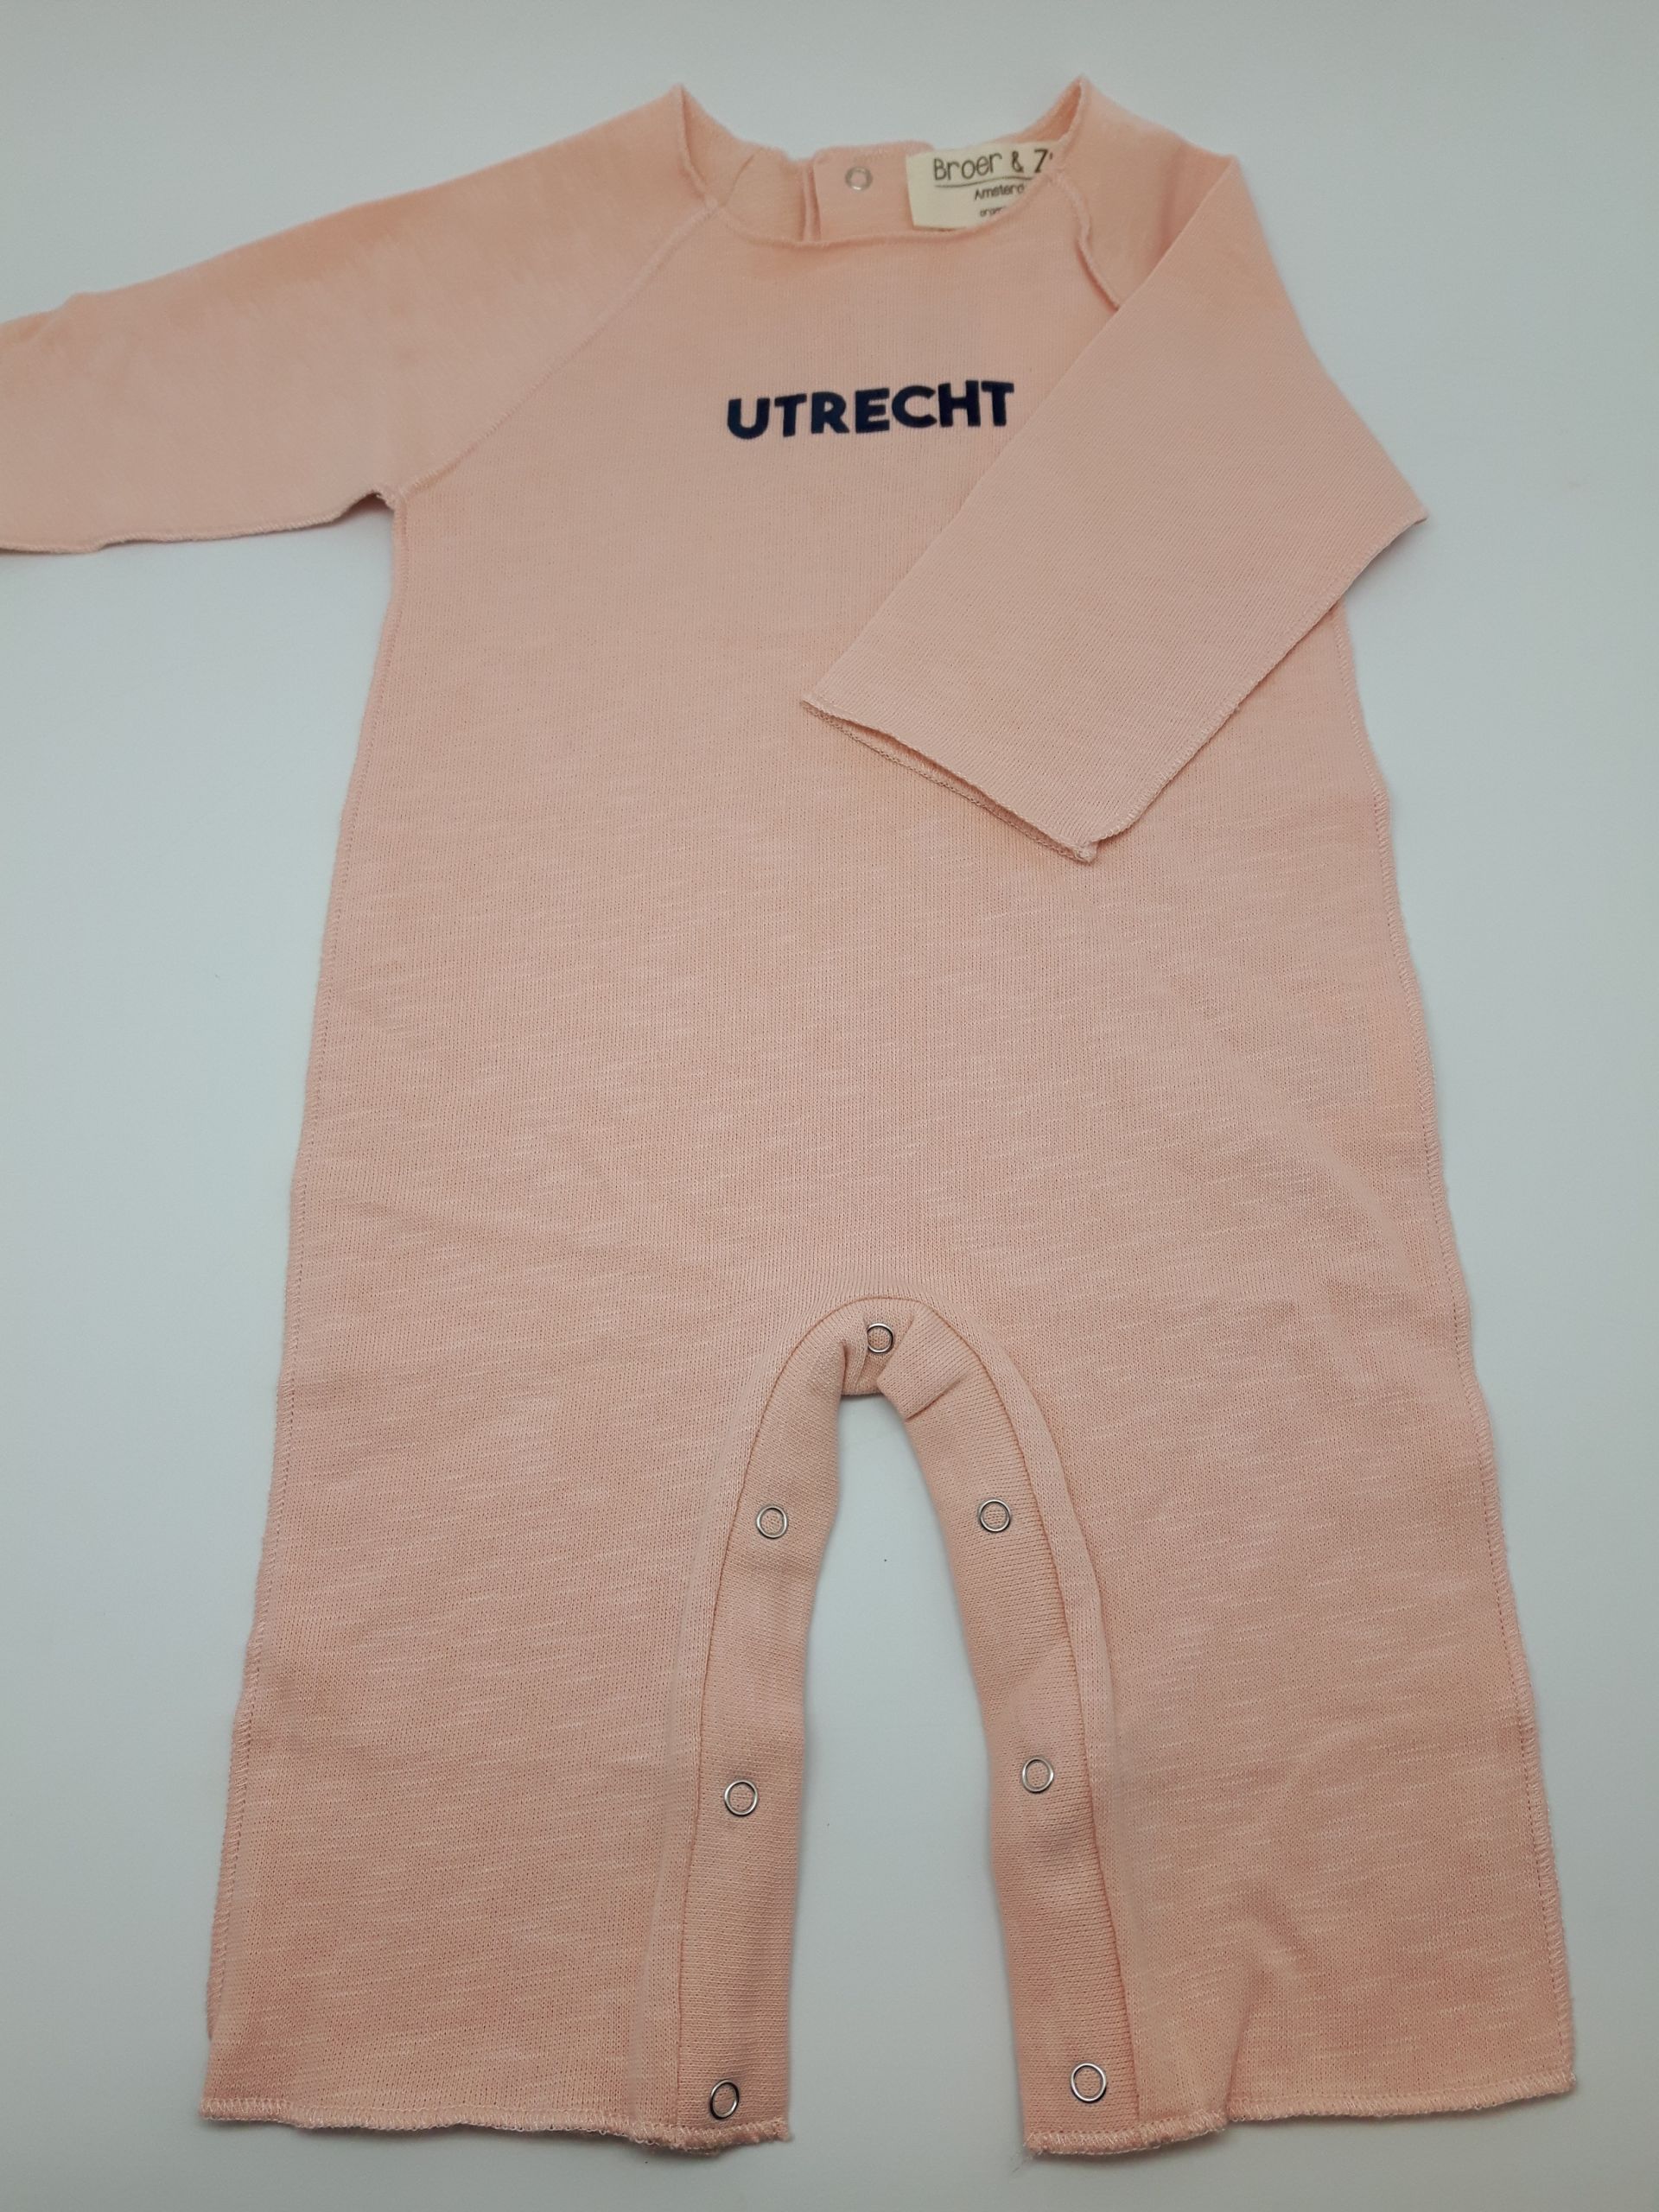 Baby pakje Utrecht pink navy 6 mnd